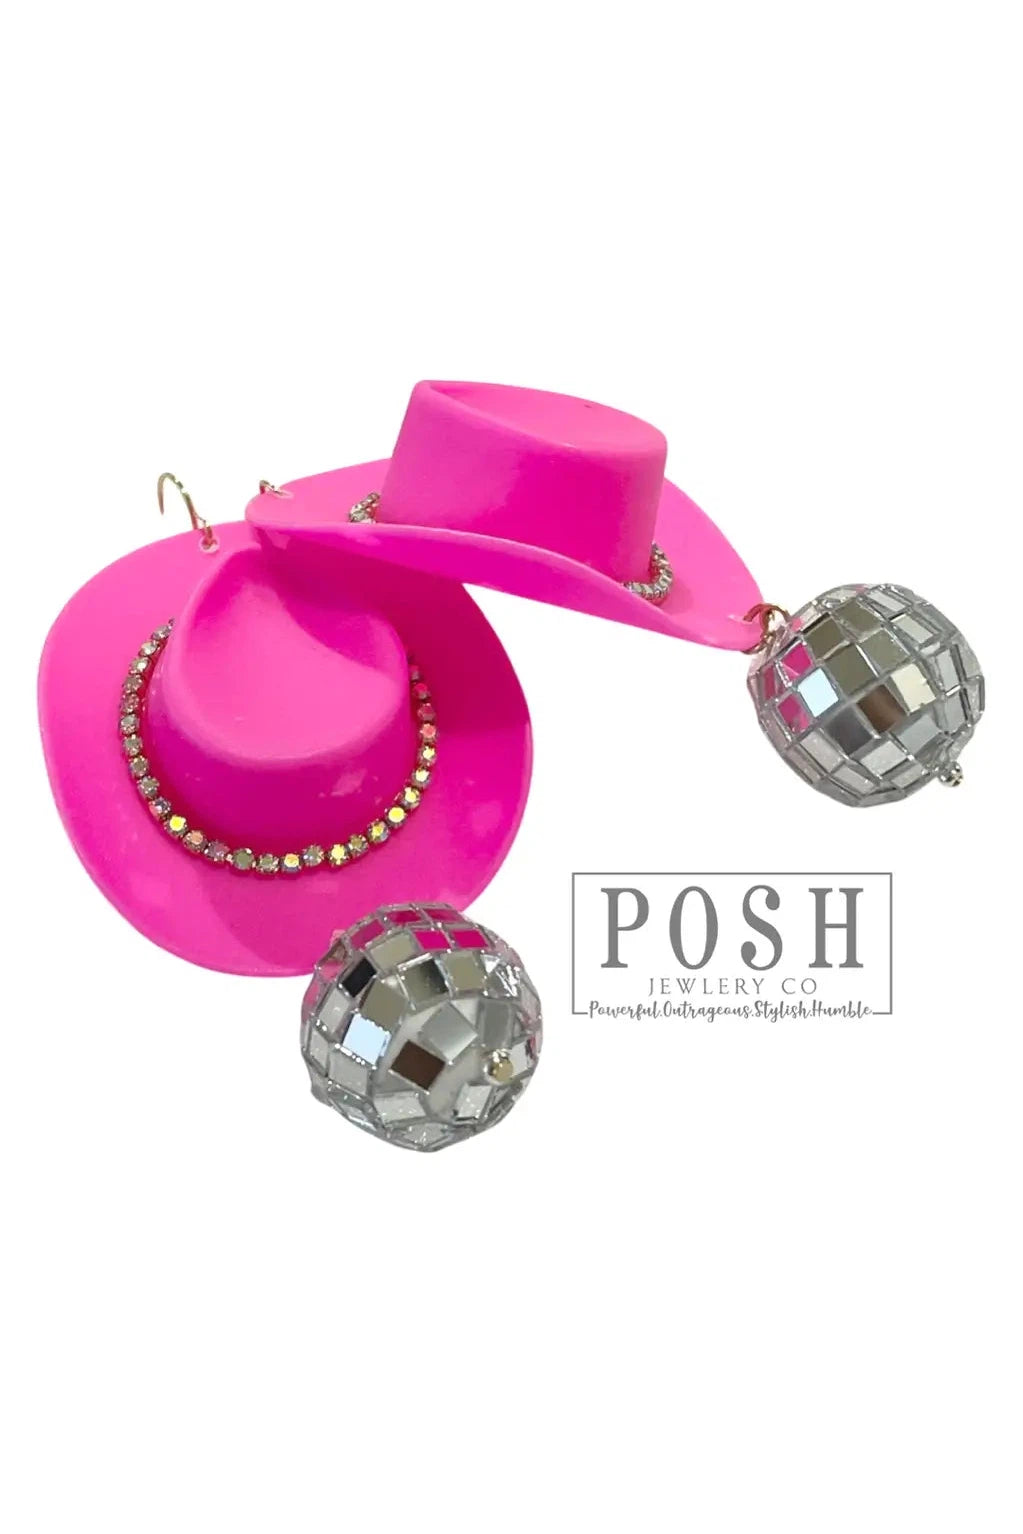 Posh Jewelry Co. Rhinestone Rimmed Cowboy Hat Disco Ball Earring